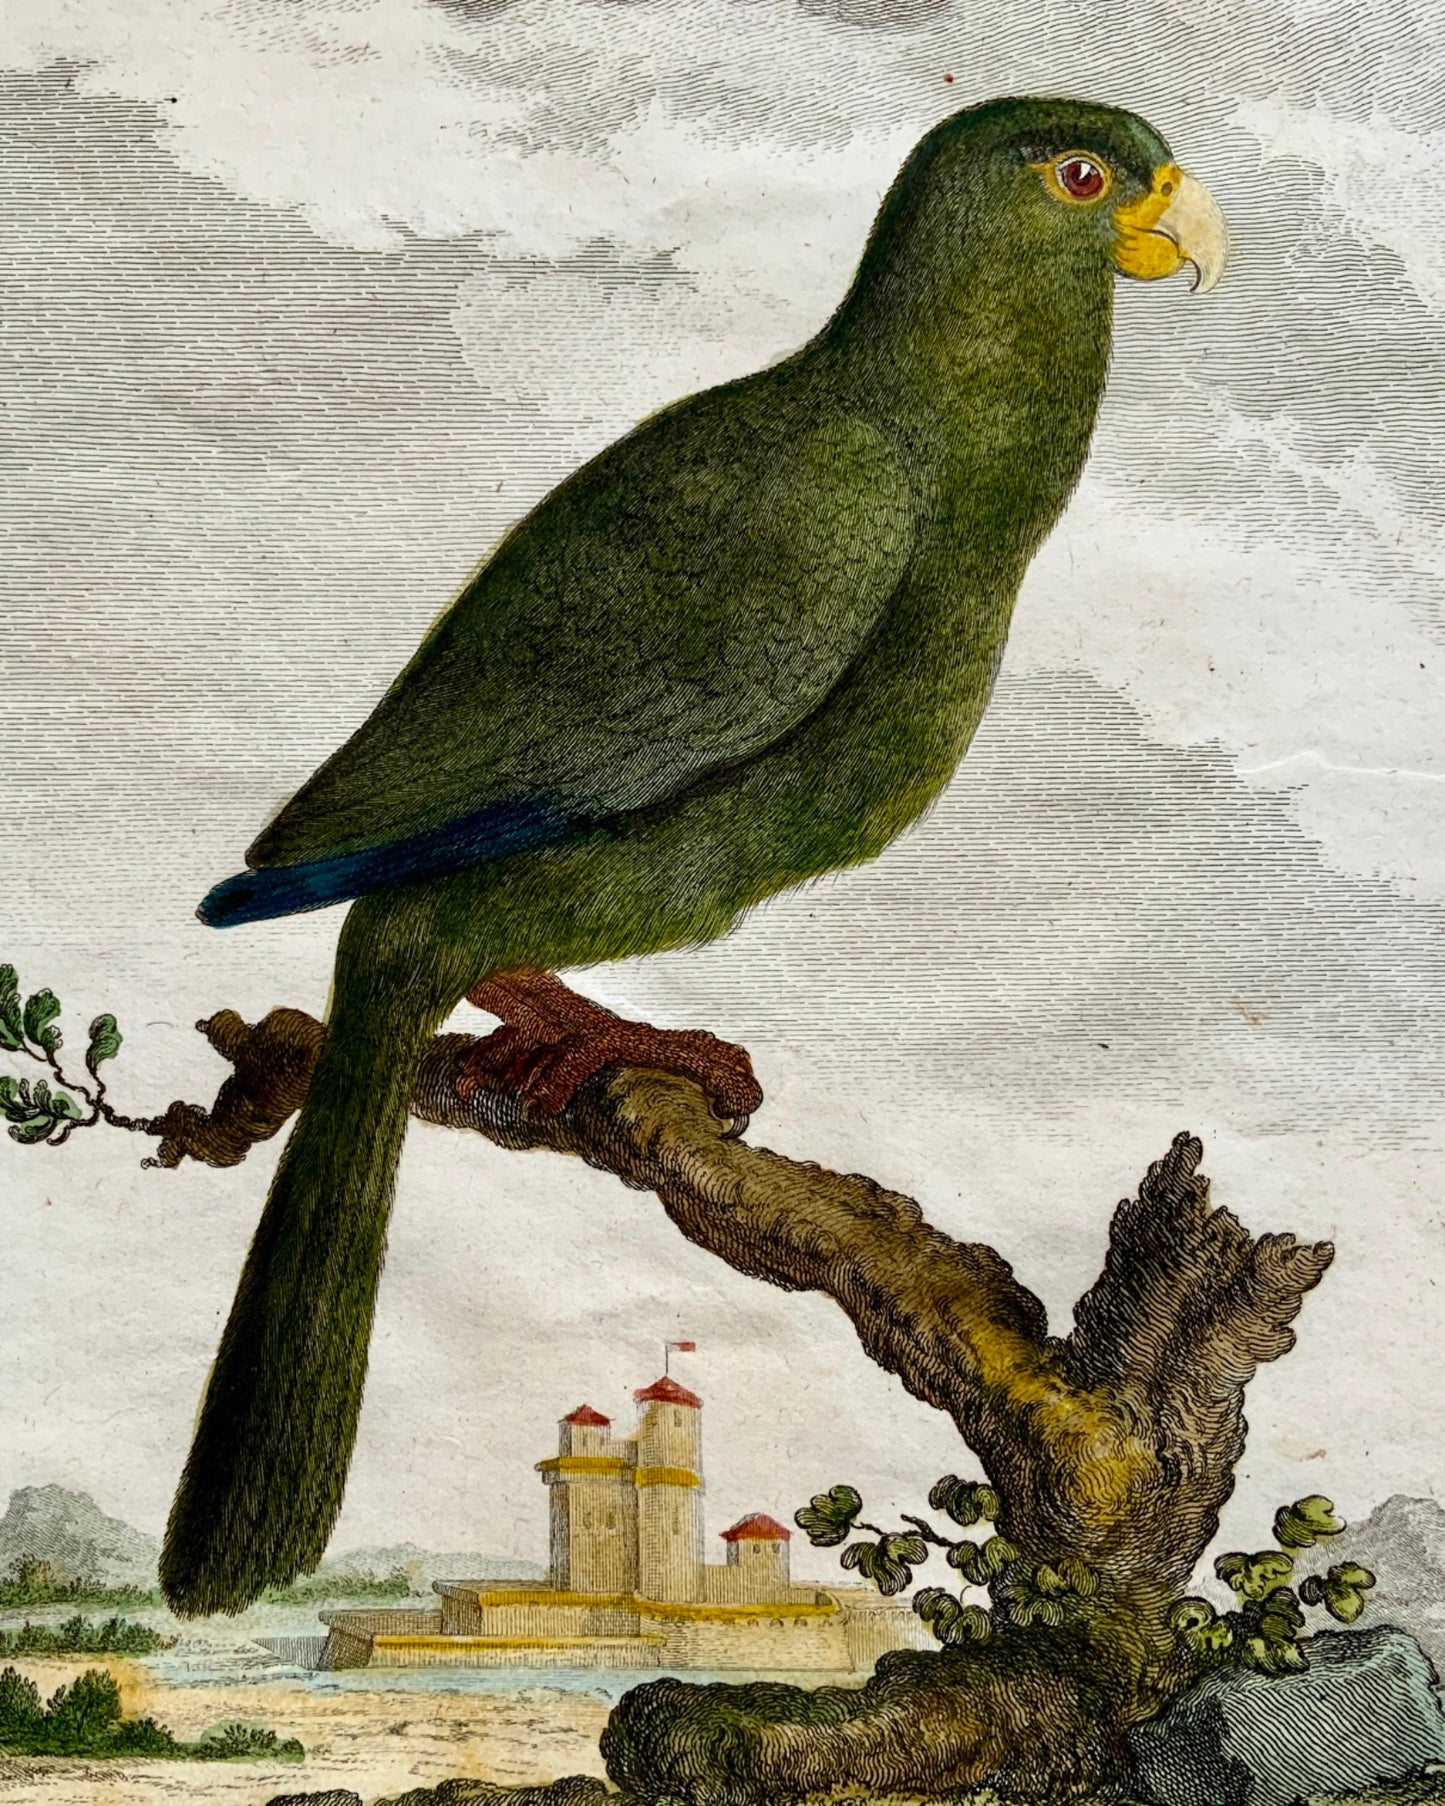 1779 Haussard after Jacques de Seve - Vasa Parrot - 4to engraving - Ornithology